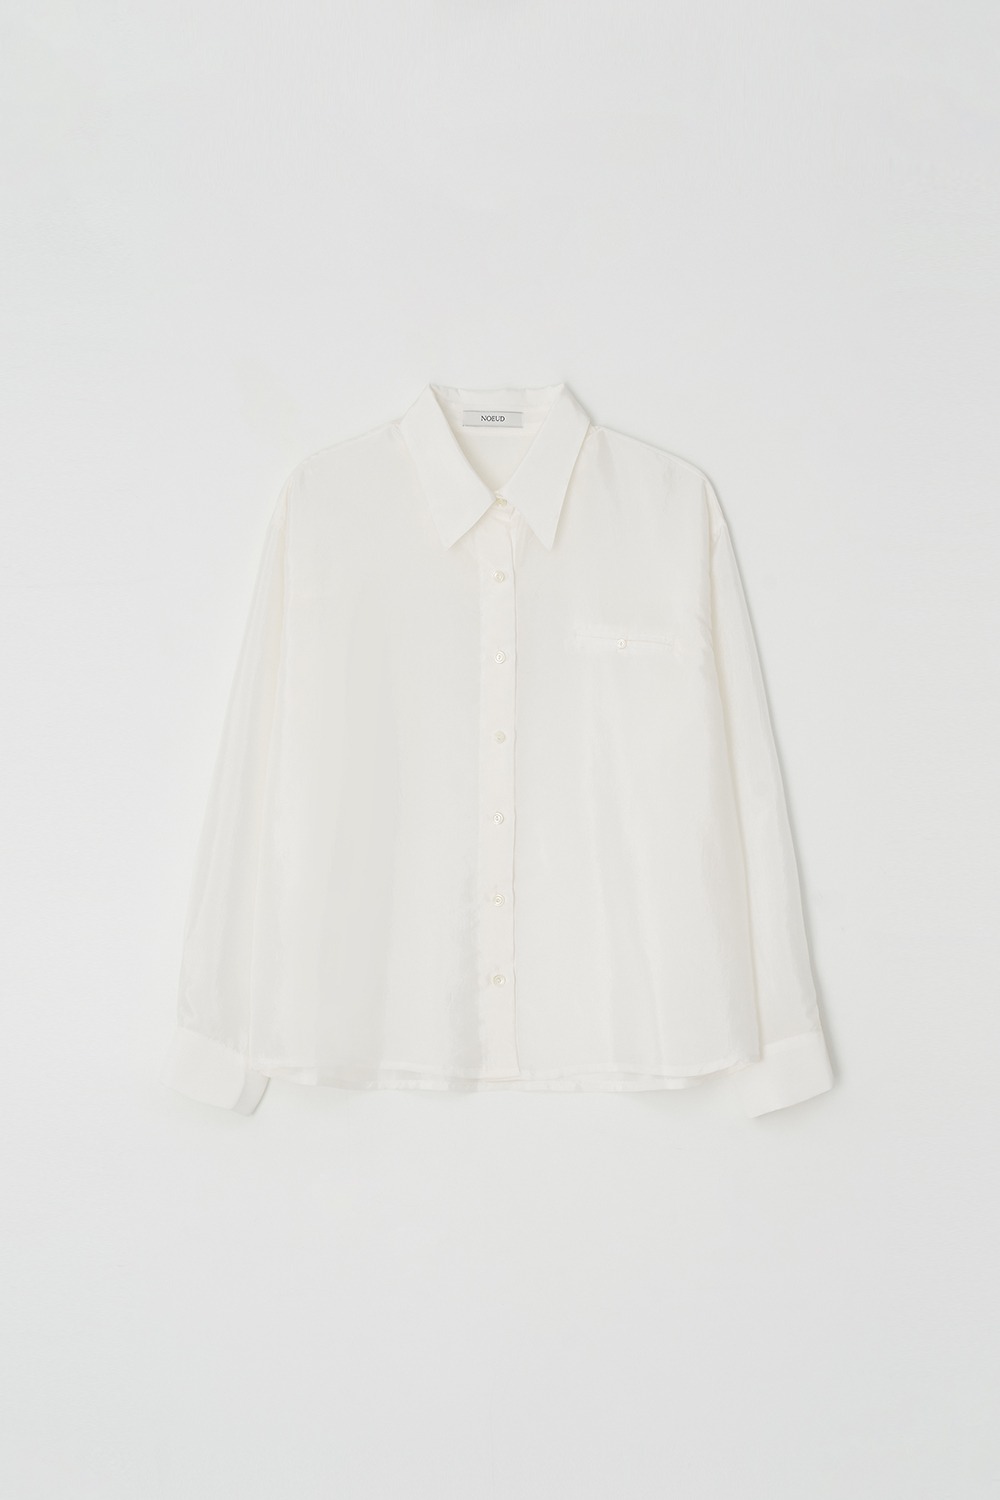 Shine overfit shirt (Ivory)